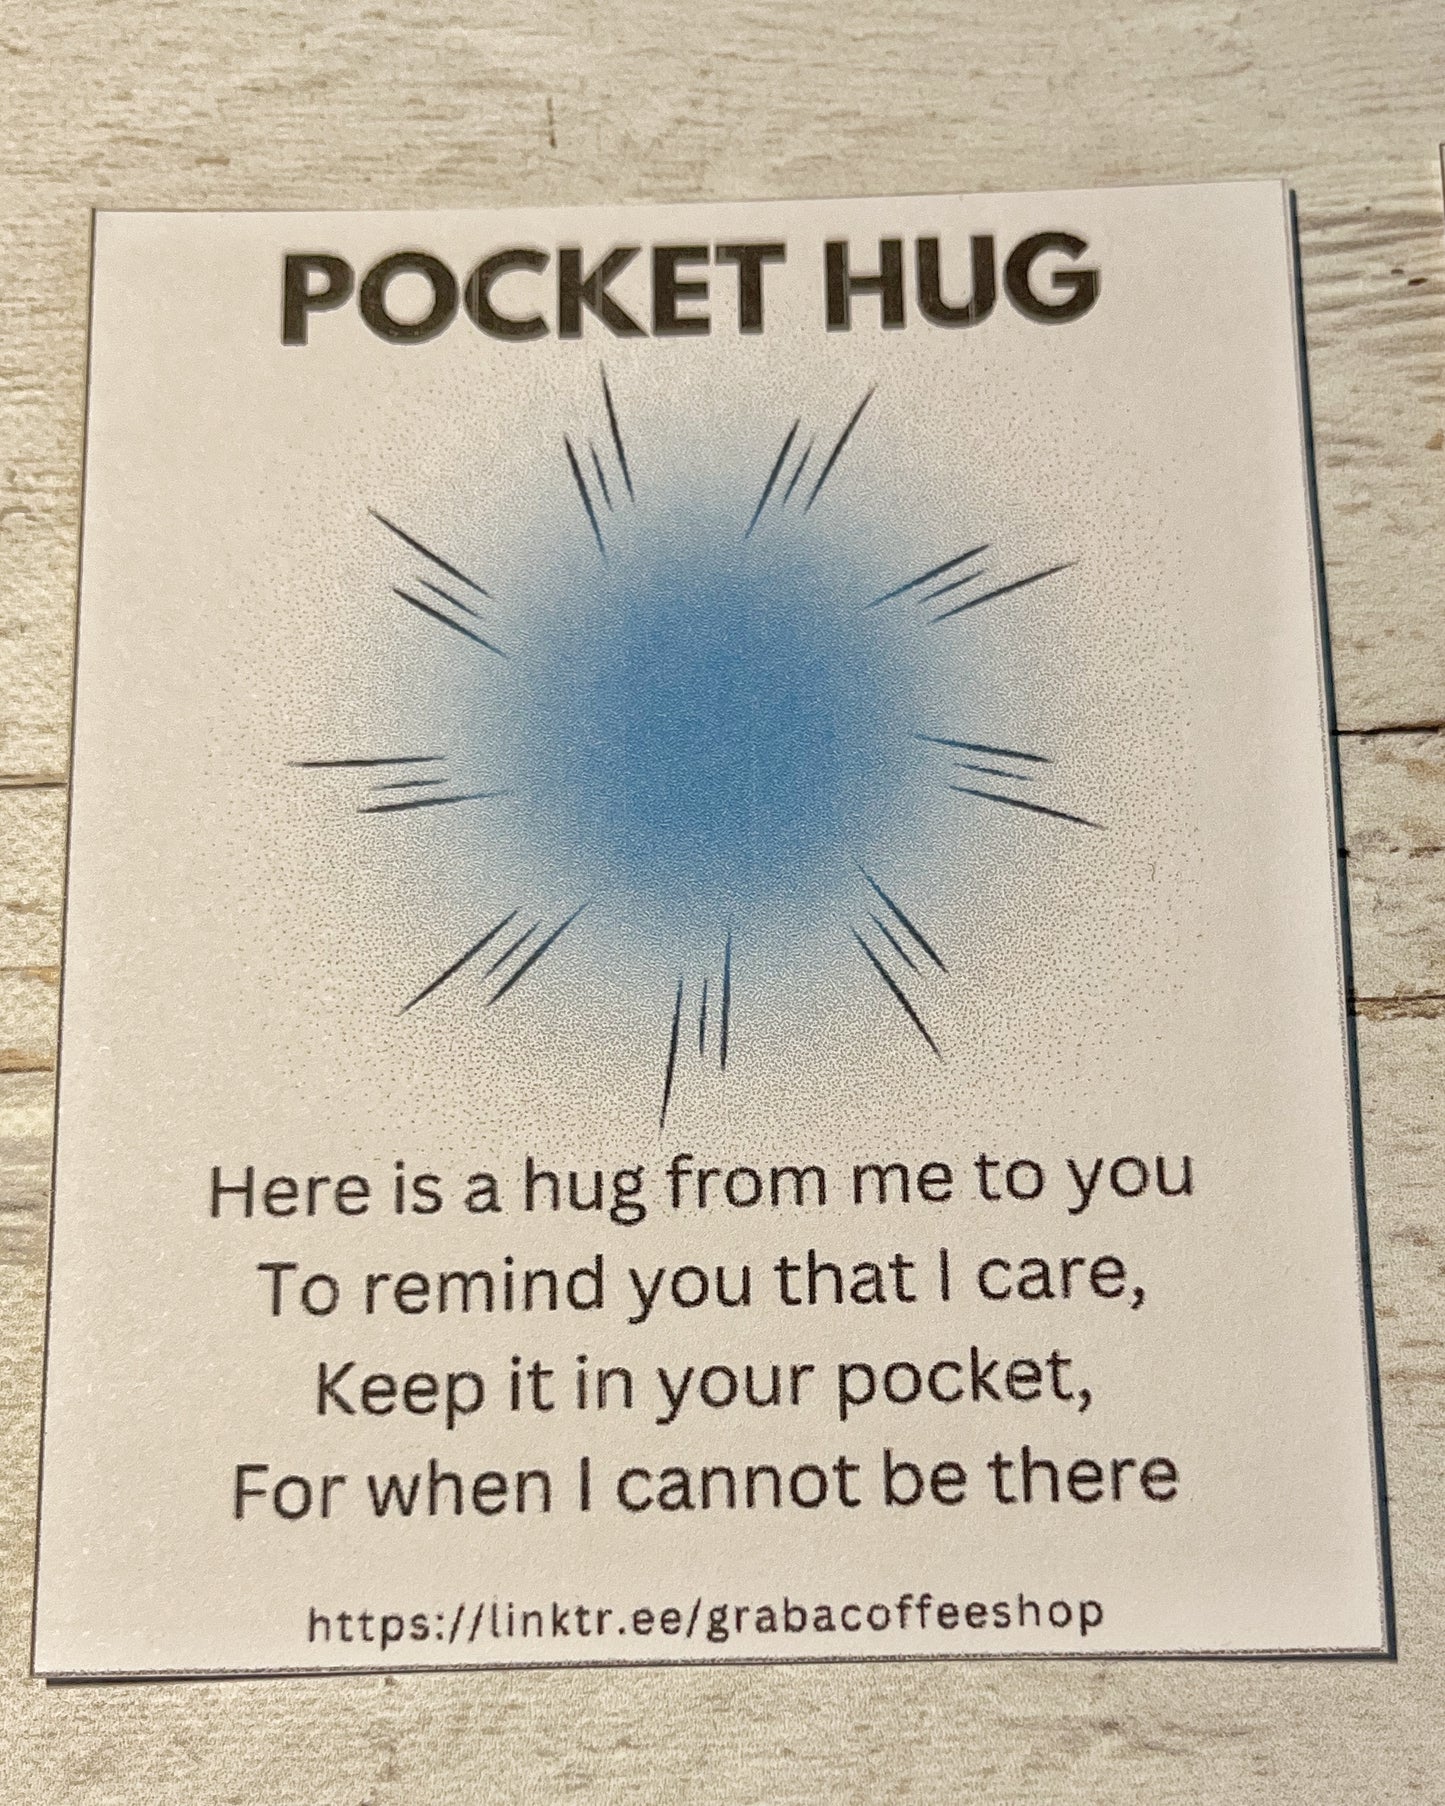 Cheer up gift, animal friend distance hug, wooden send a hug token, tiny pocket hug friend